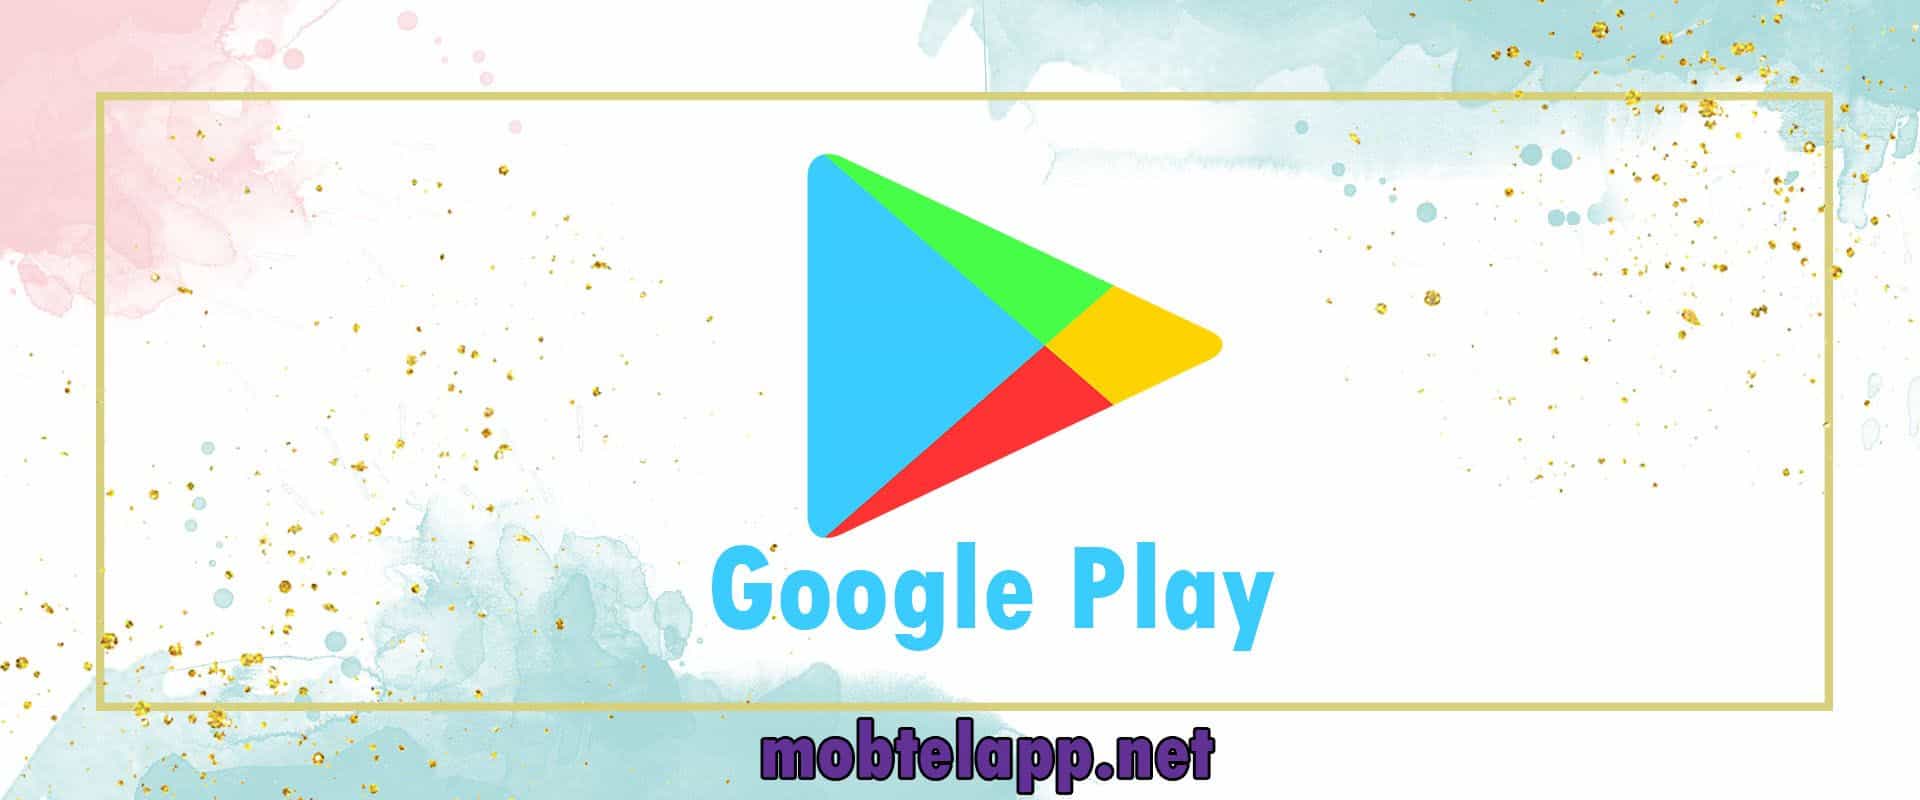 تحميل متجر بلاي Google Play Apk اخر اصدار للاندرويد